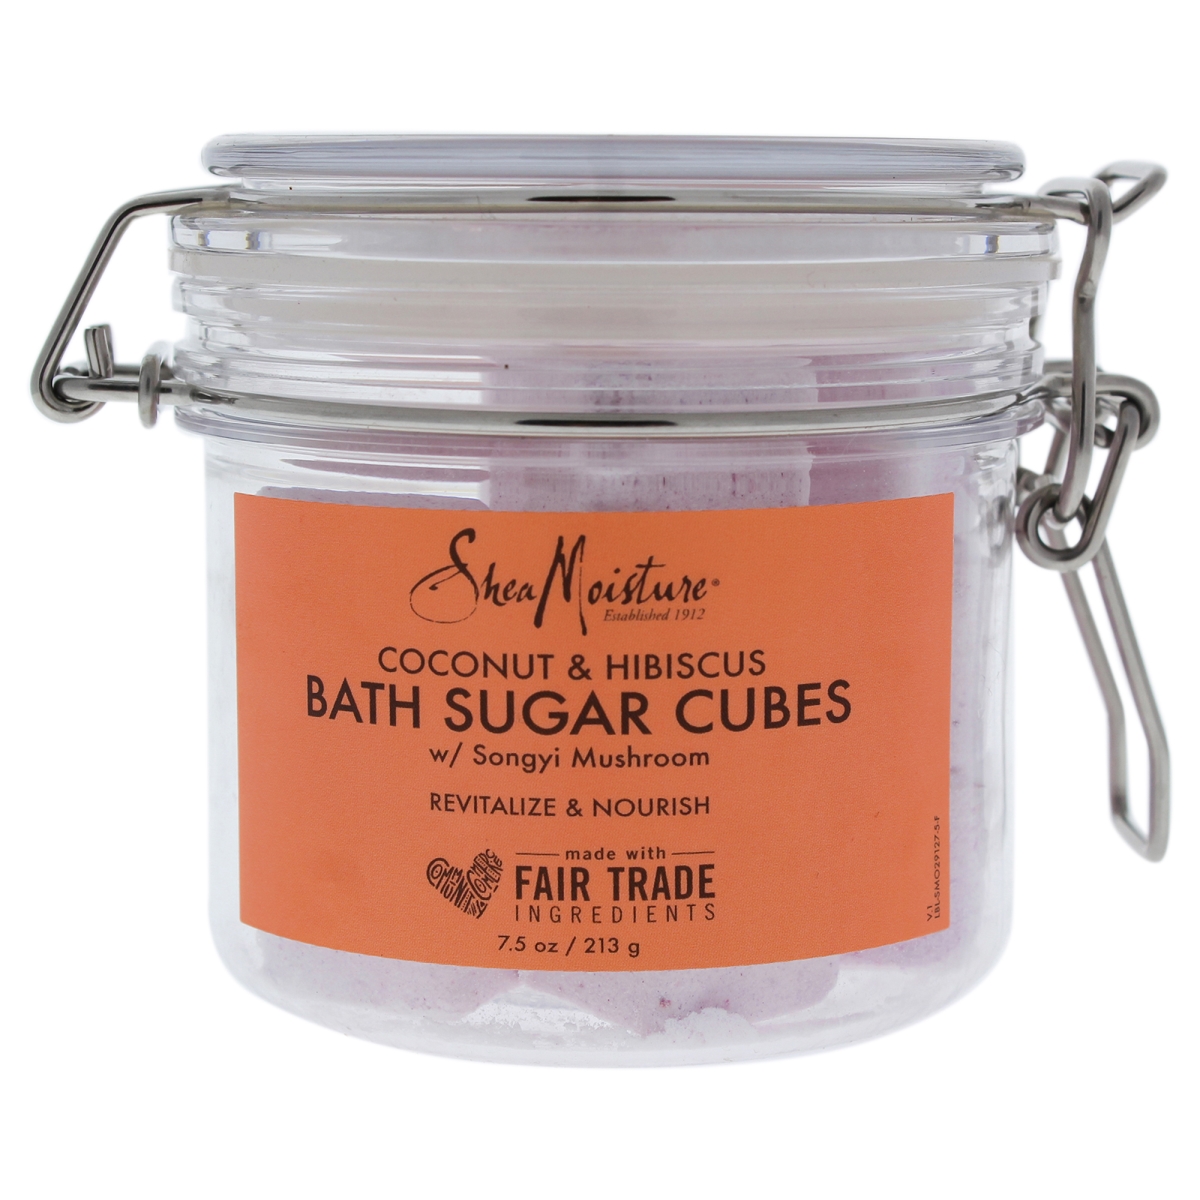 I0087742 Coconut & Hibiscus Bath Sugar Cubes Bath Soak For Unisex - 7.5 Oz